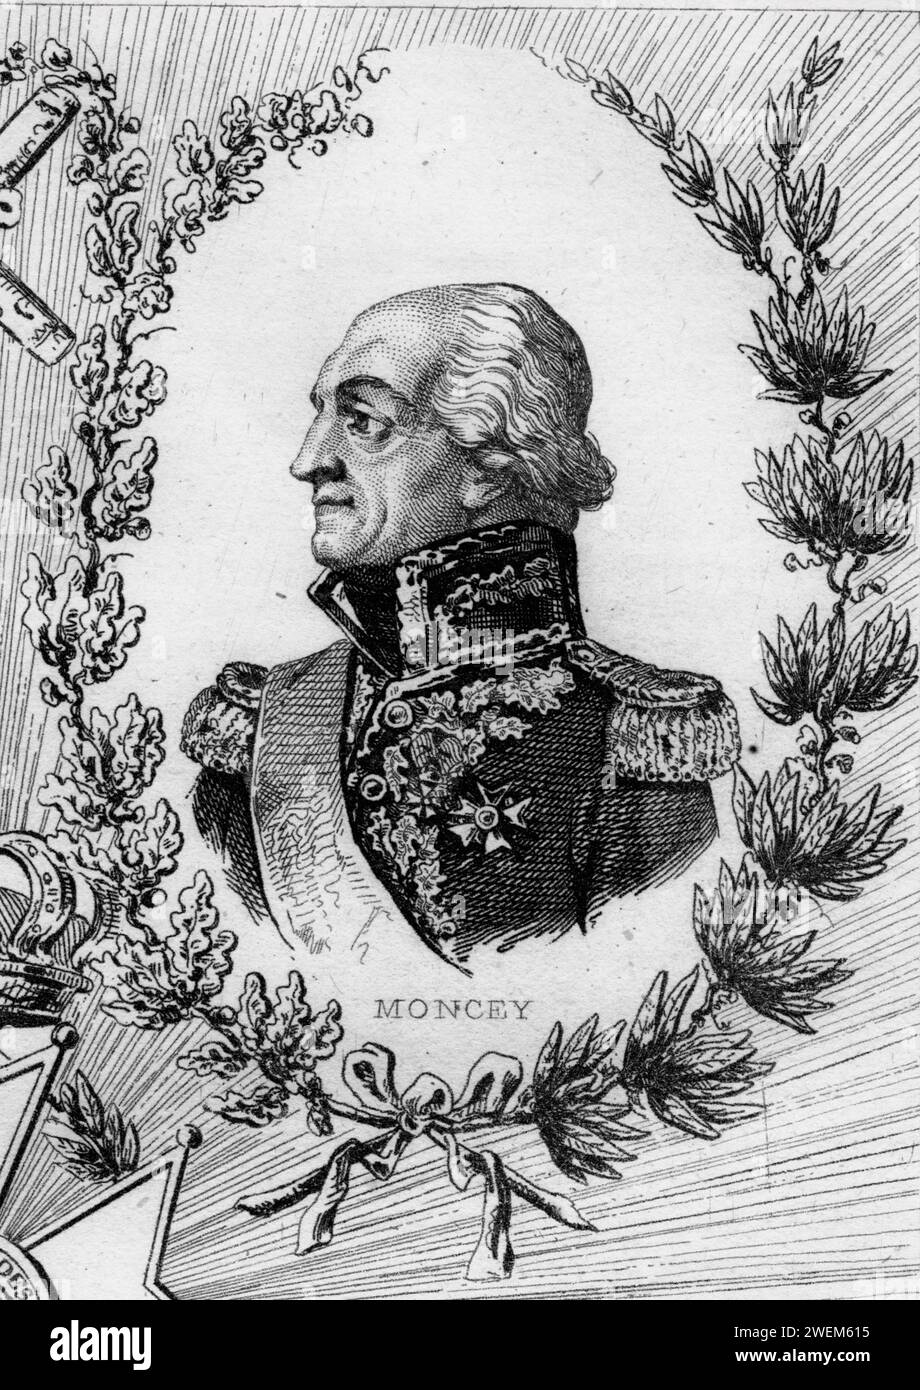 Portrait of French Marshal Bon-Adrien Jeannot de Moncey, 1st Duke de Conegliano, by Reville Stock Photo